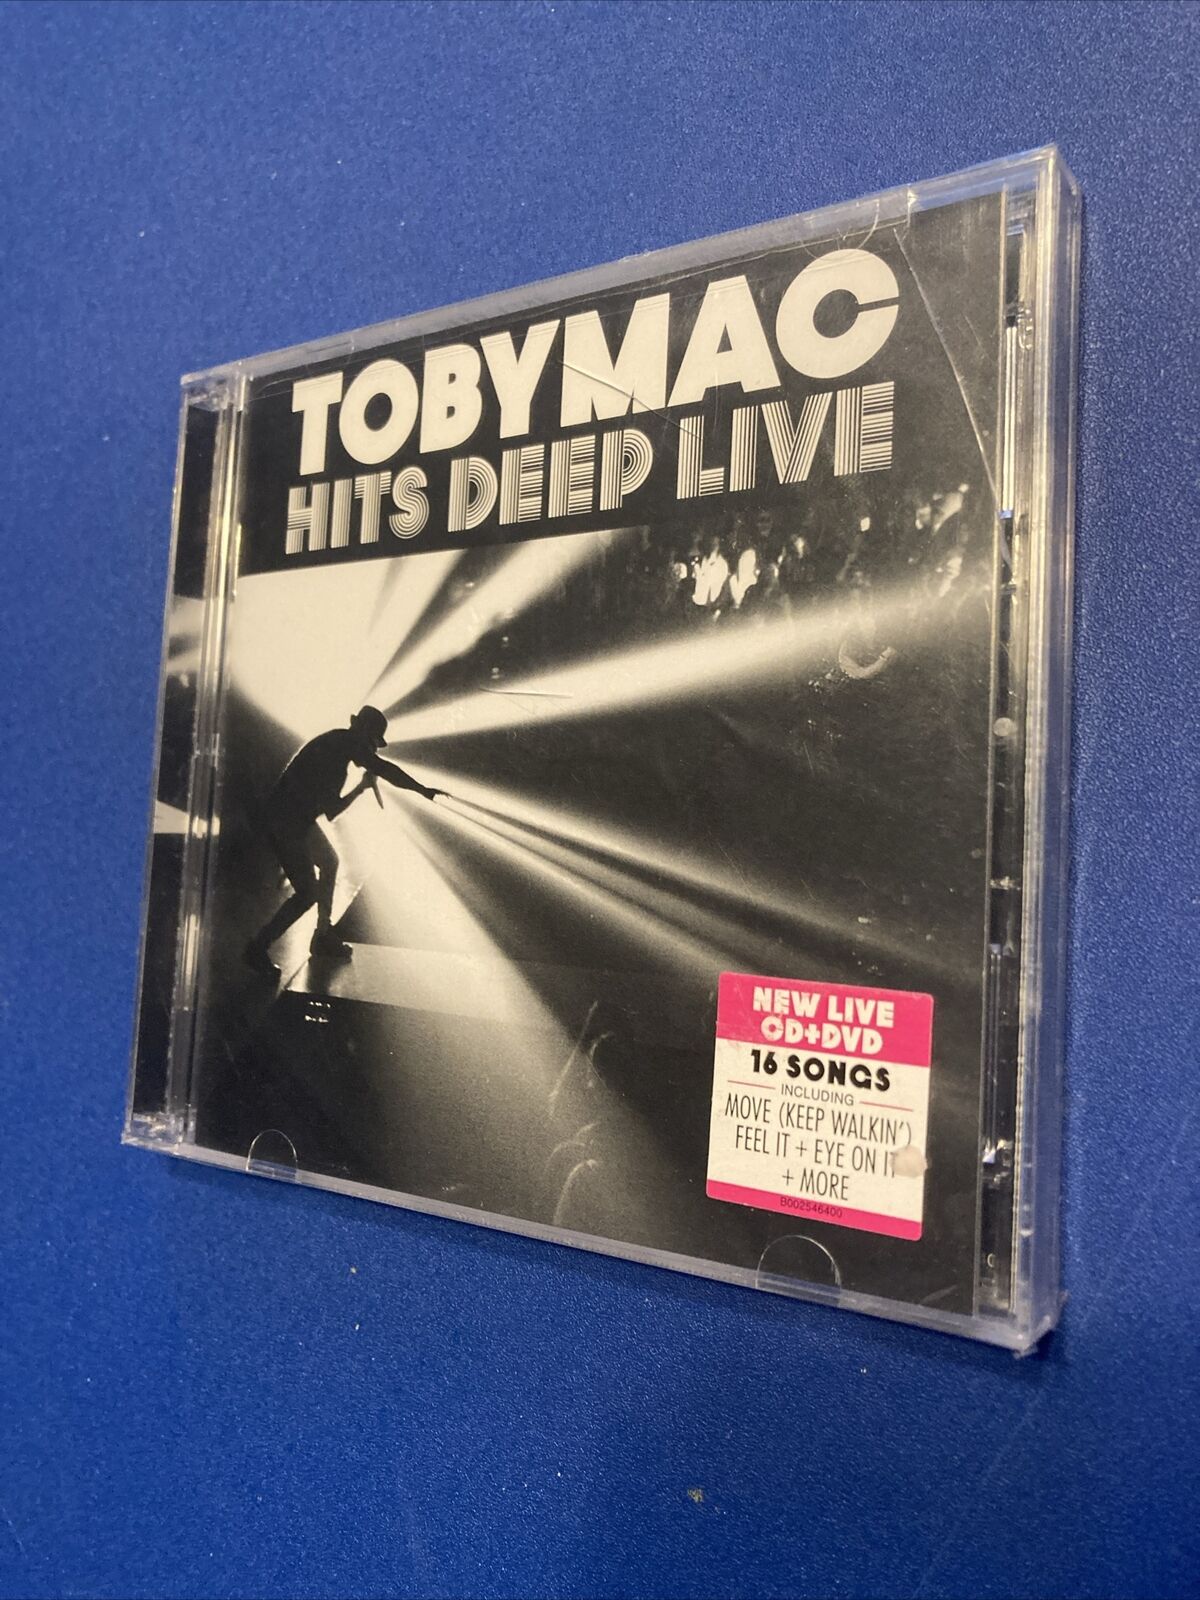 Toby Mac - Hits Deep Live [CD/DVD Combo] - Brand New Factory Sealed RARE HTF